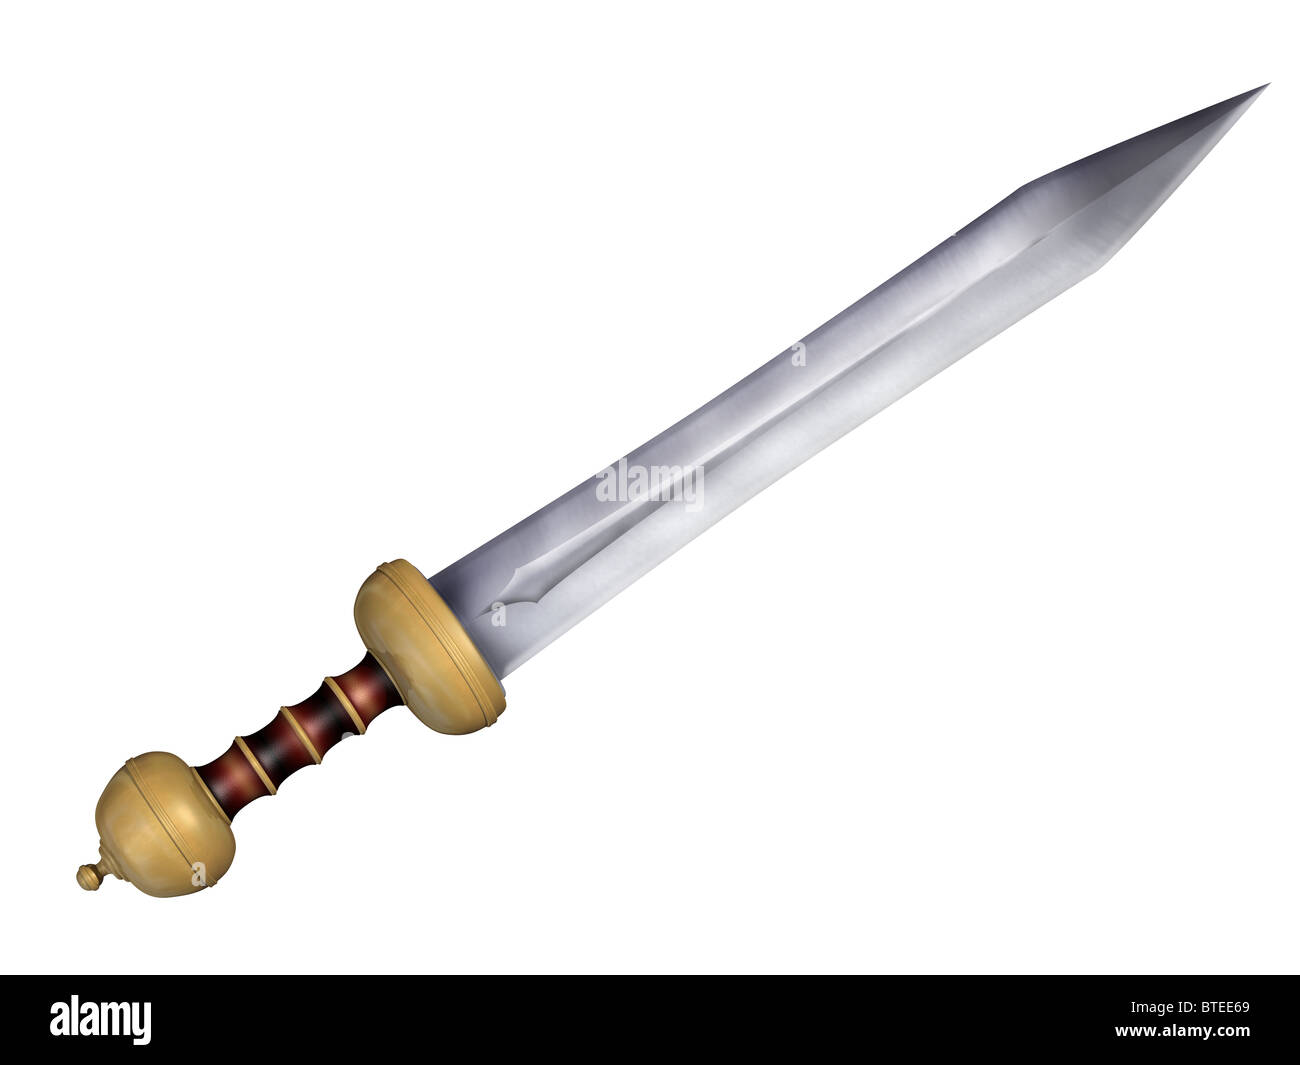 Isolated illustration of a Roman Gladius short sword Stock Photo